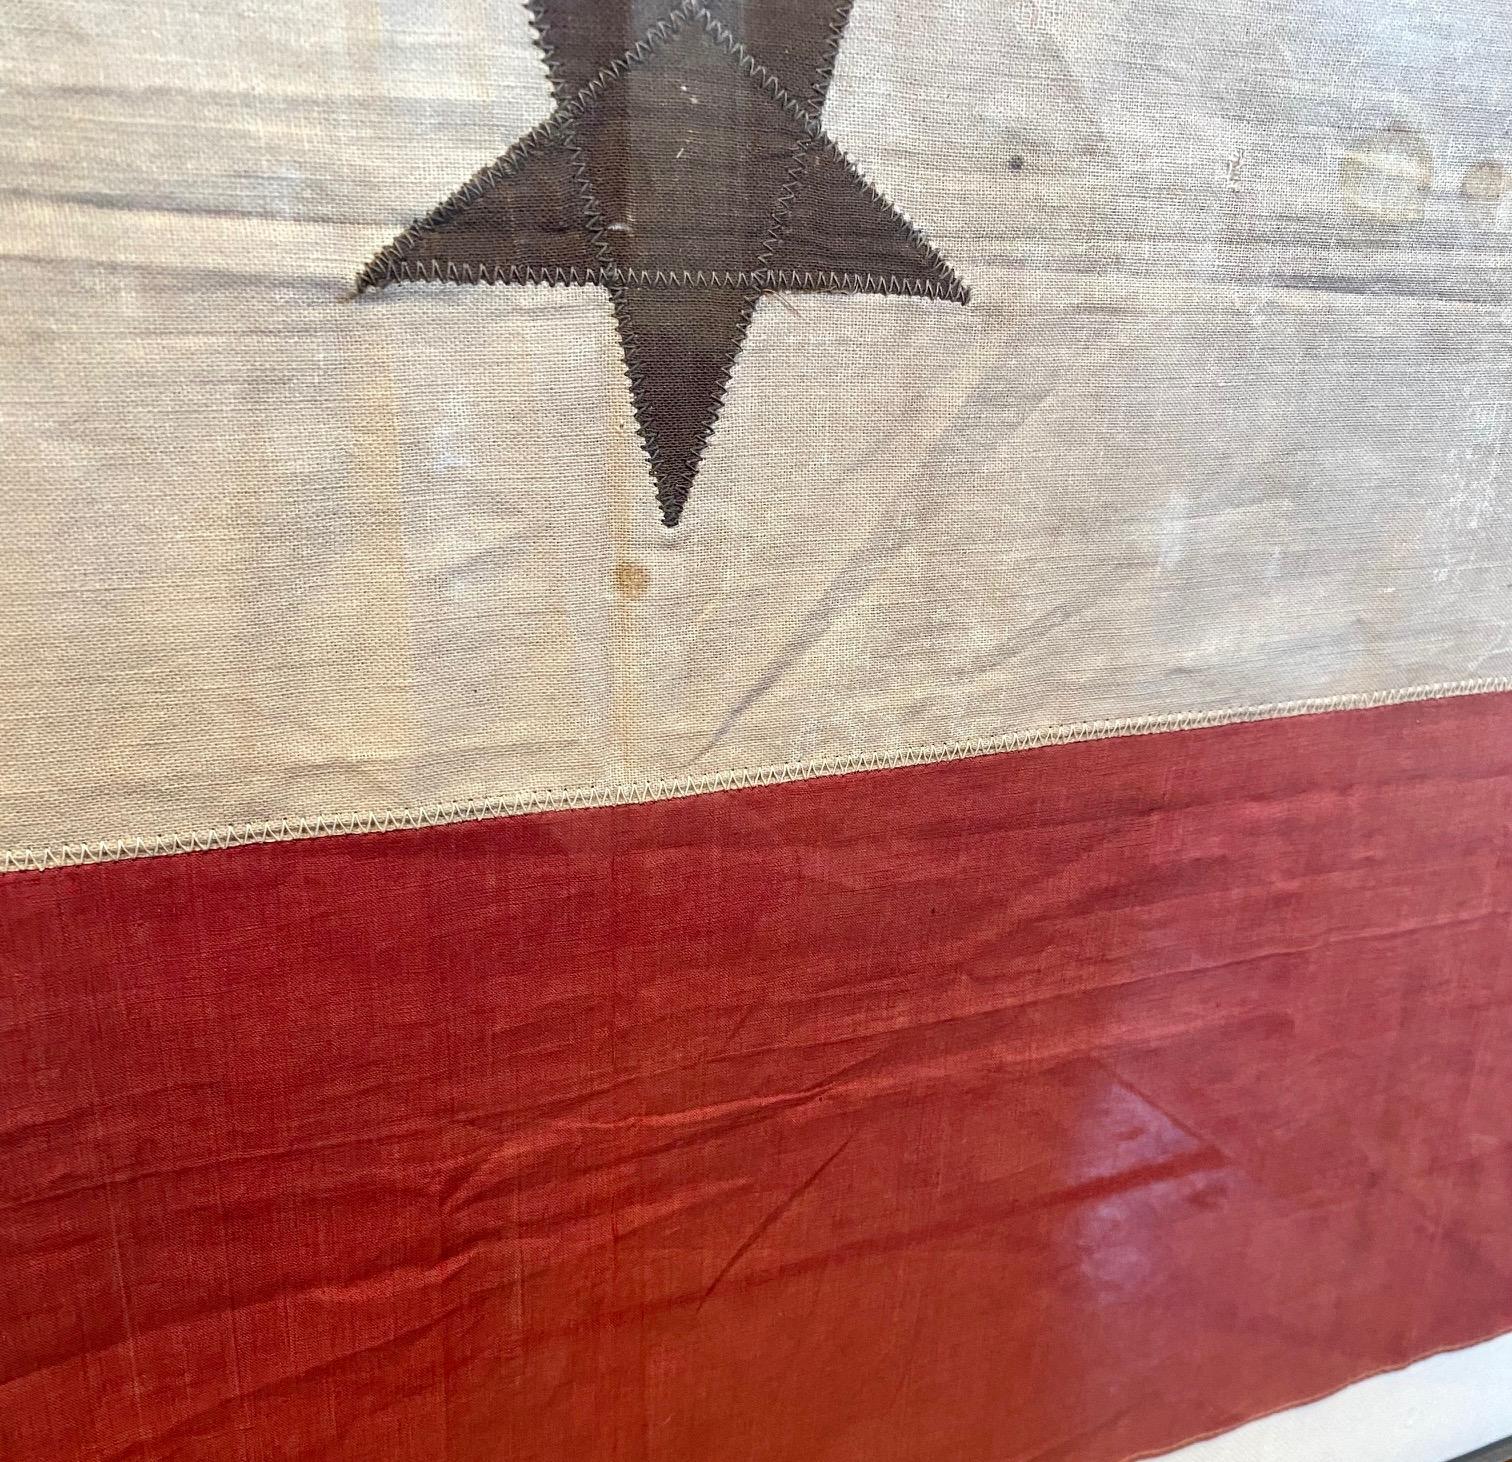 Other Historic American Blue Star Flag, circa 1917